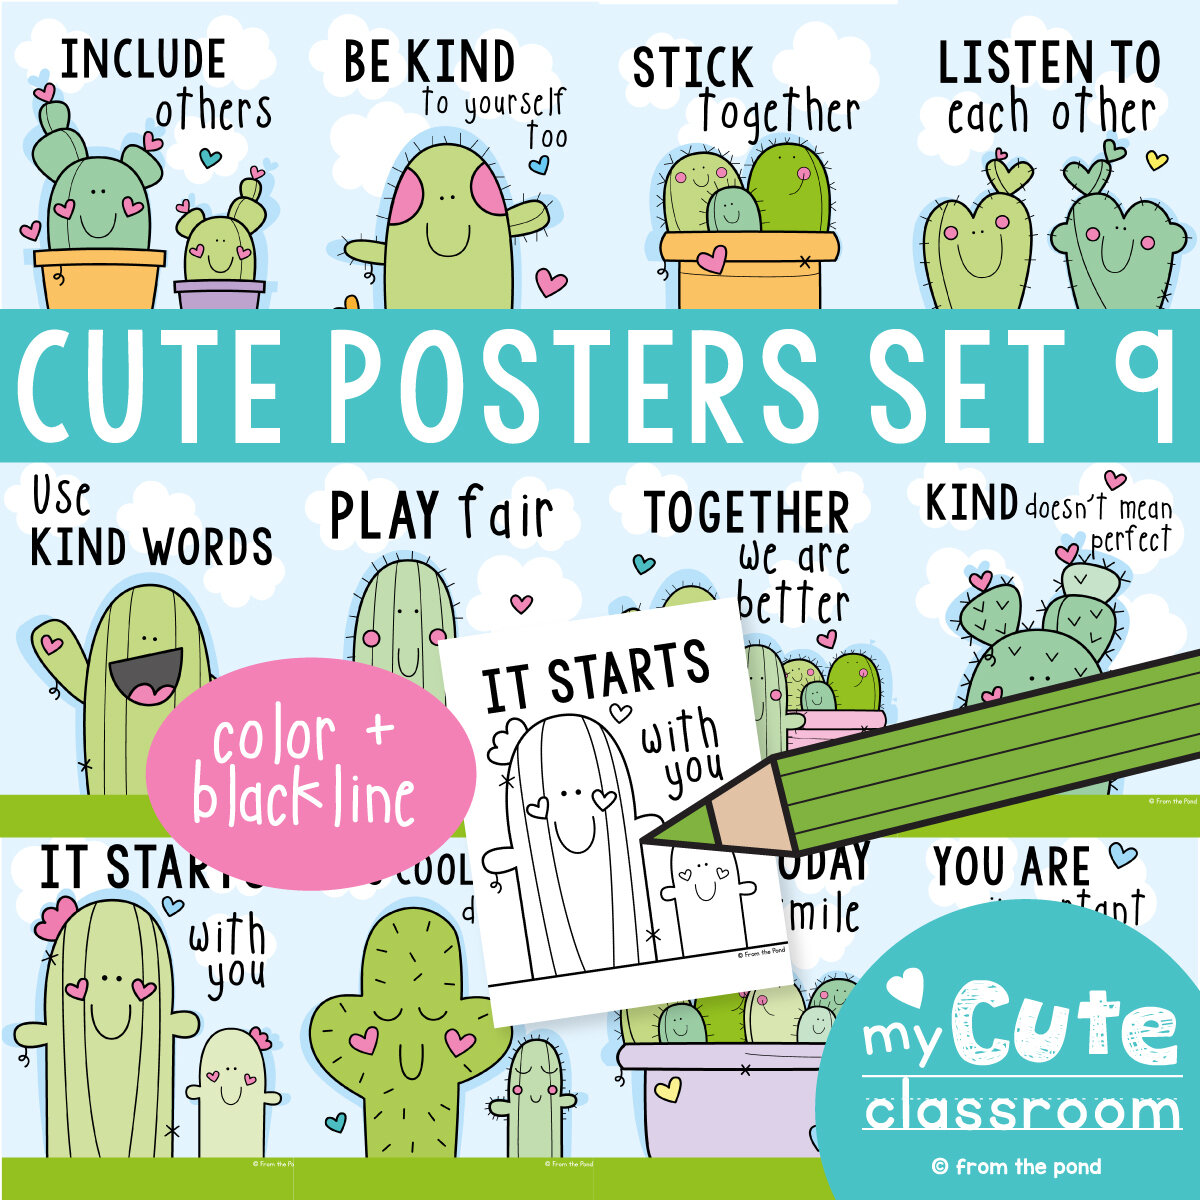 Cute Posters Set 9